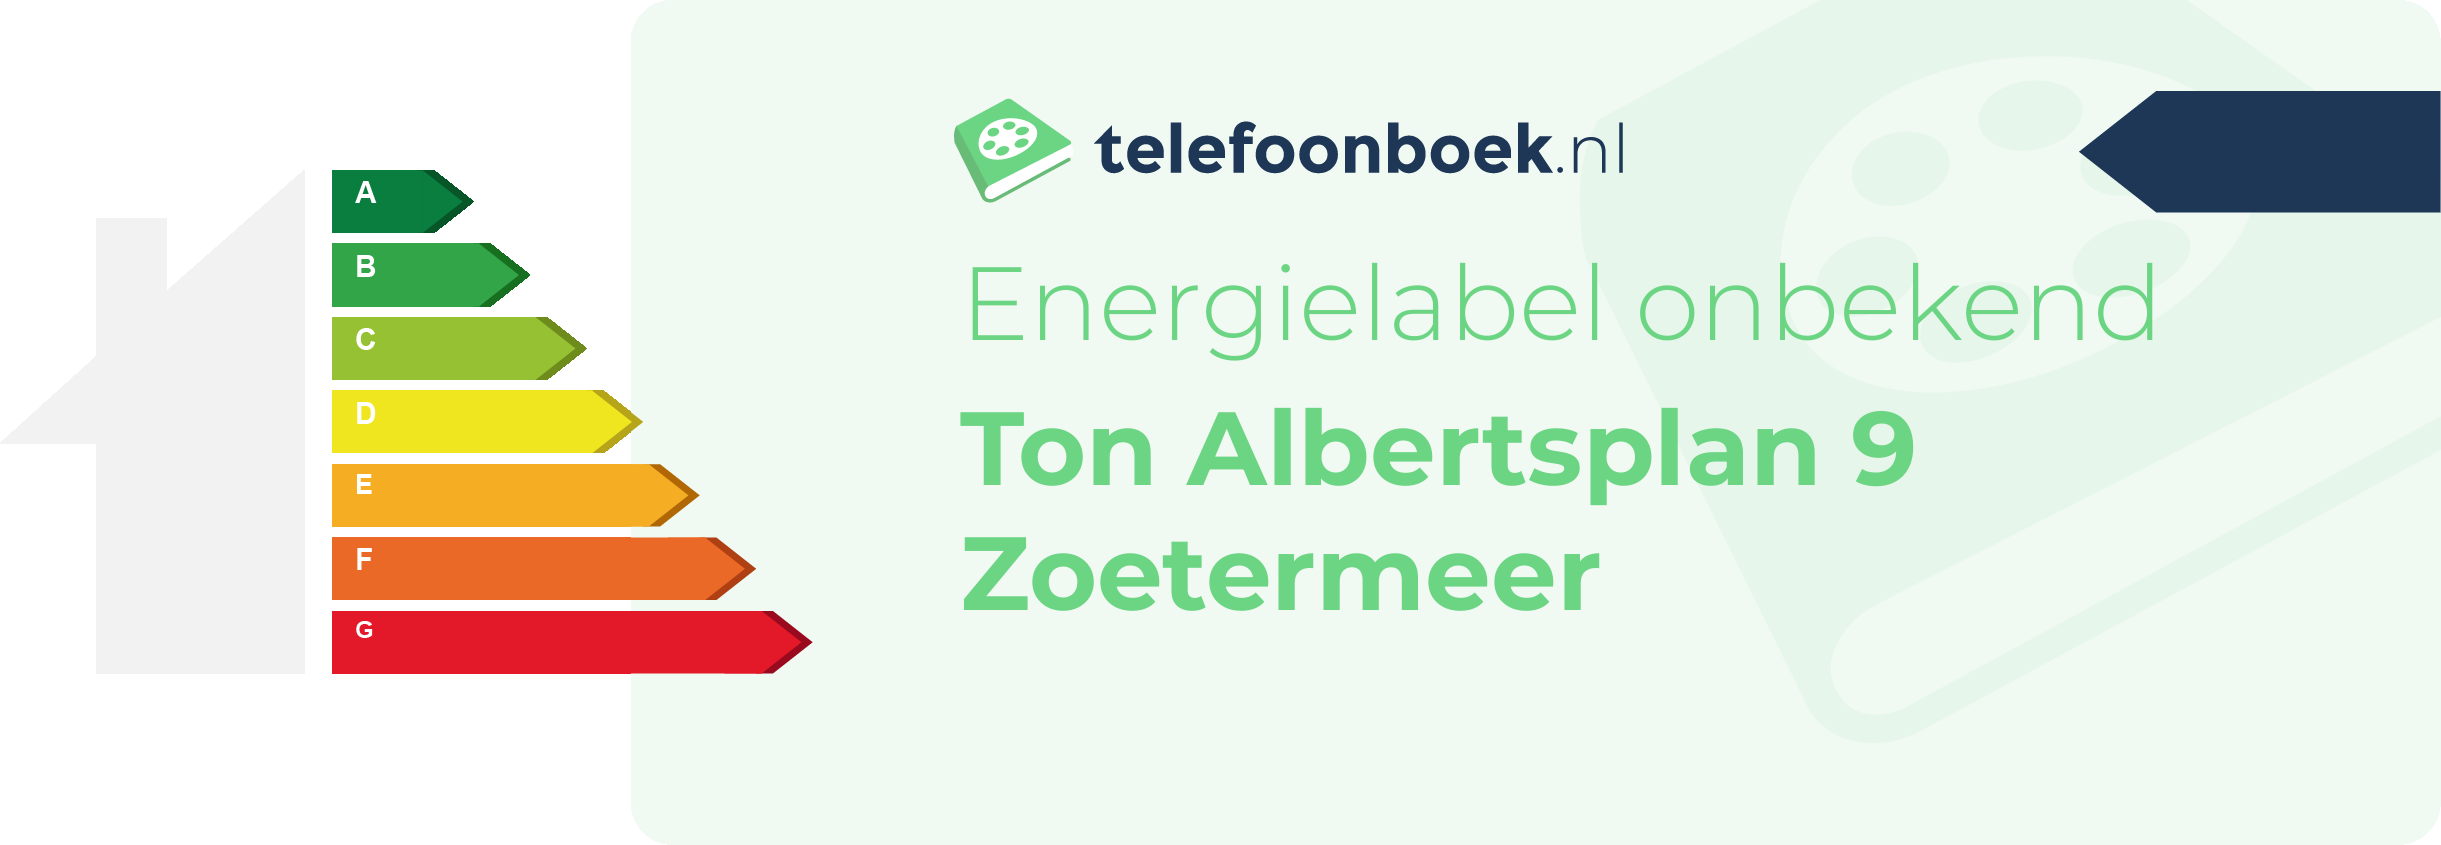 Energielabel Ton Albertsplan 9 Zoetermeer